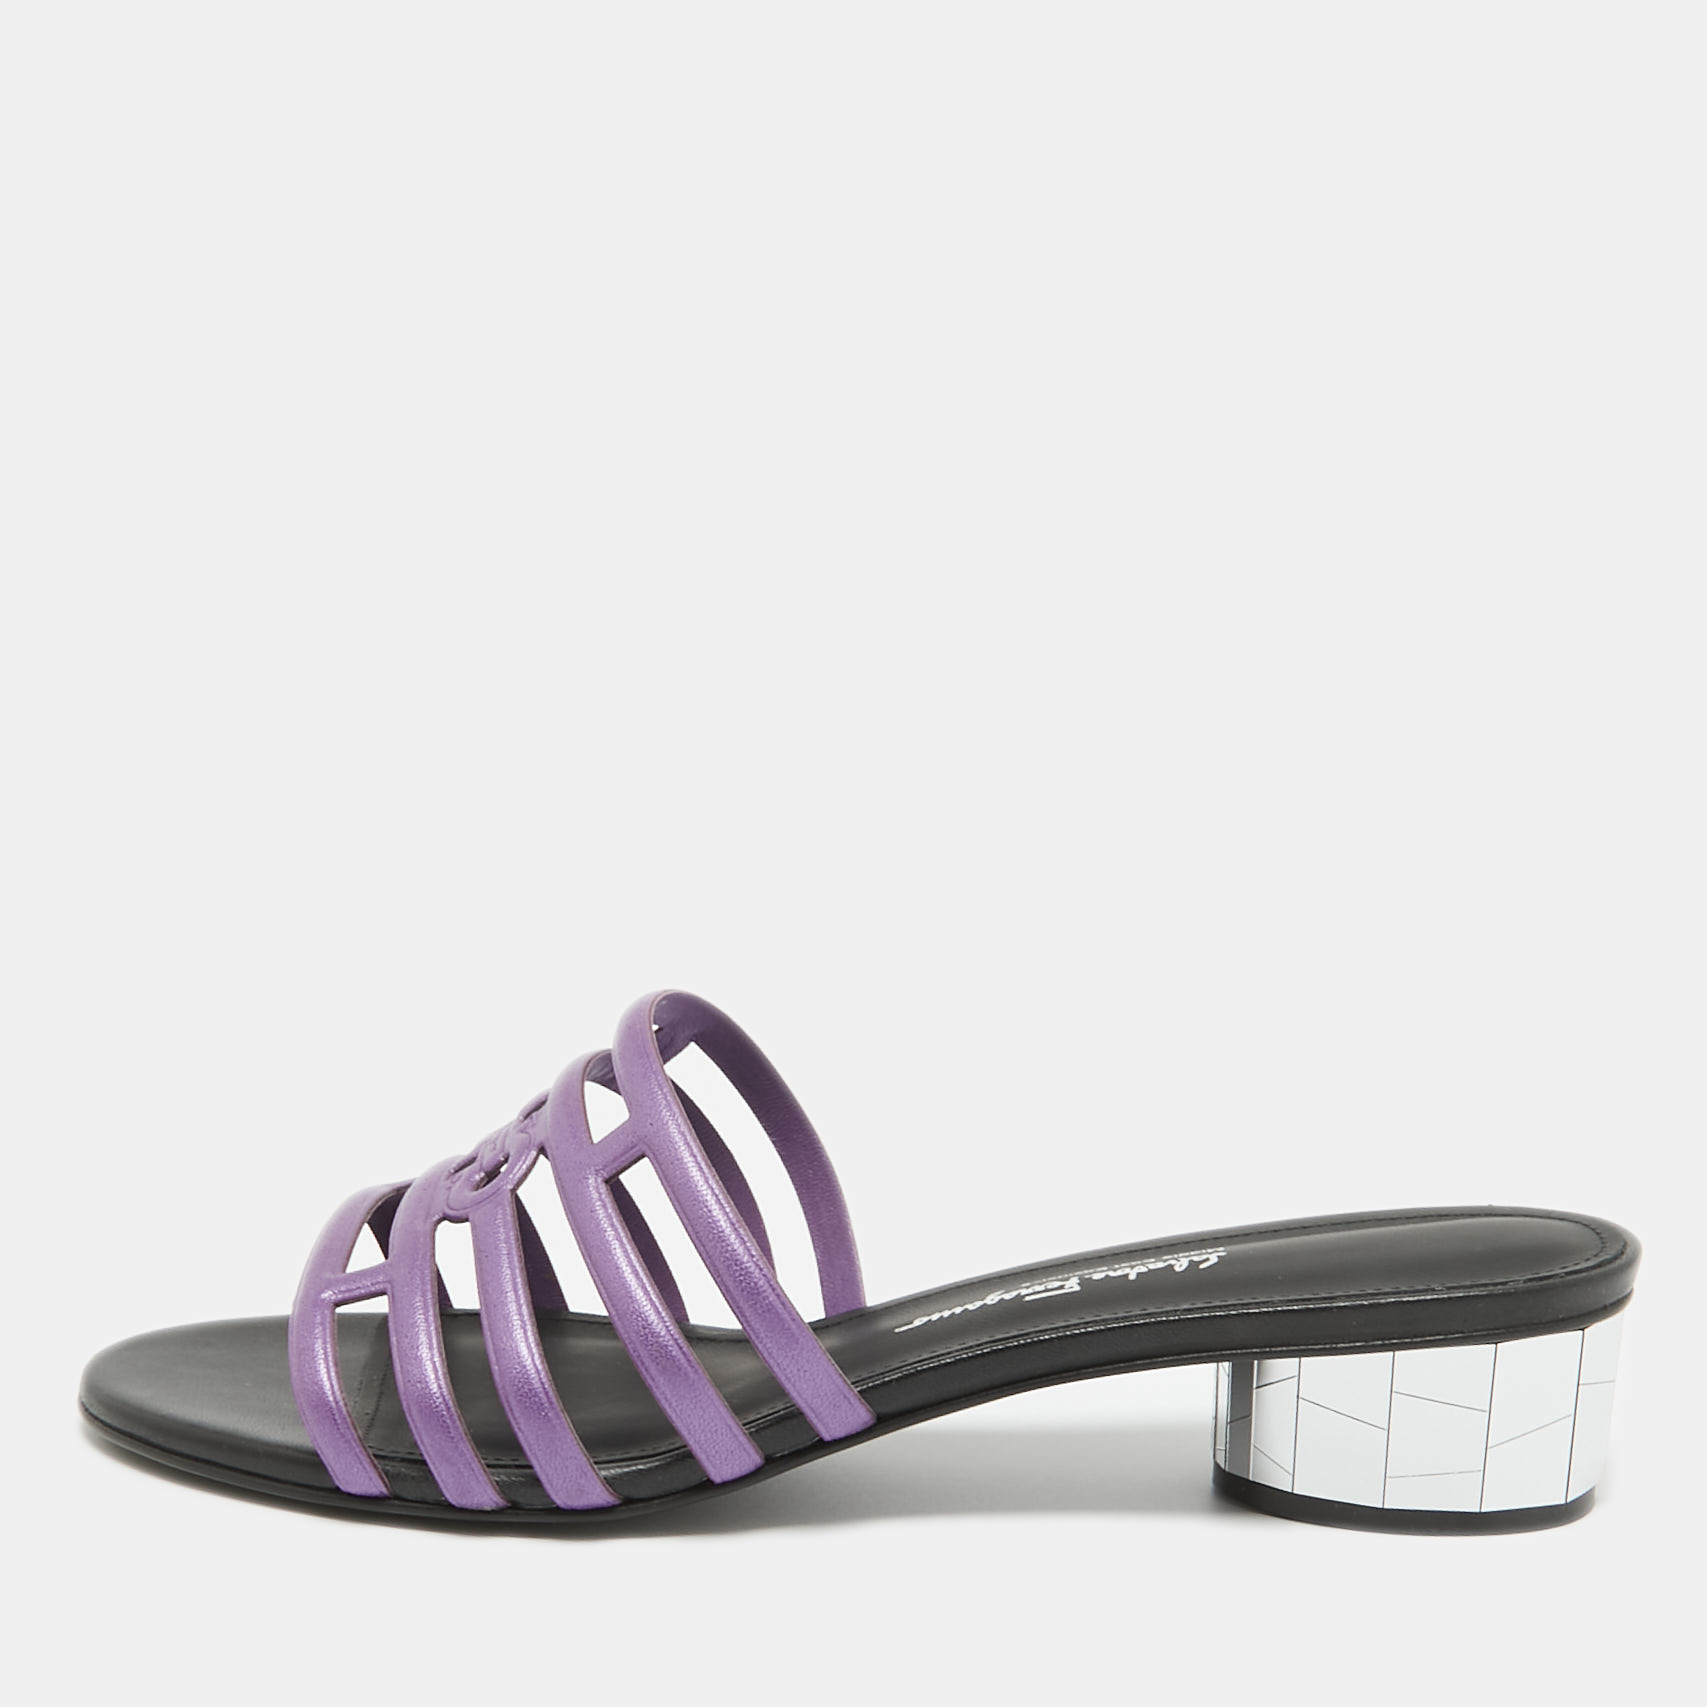 Salvatore ferragamo purple/black leather finn slide sandals size 38.5